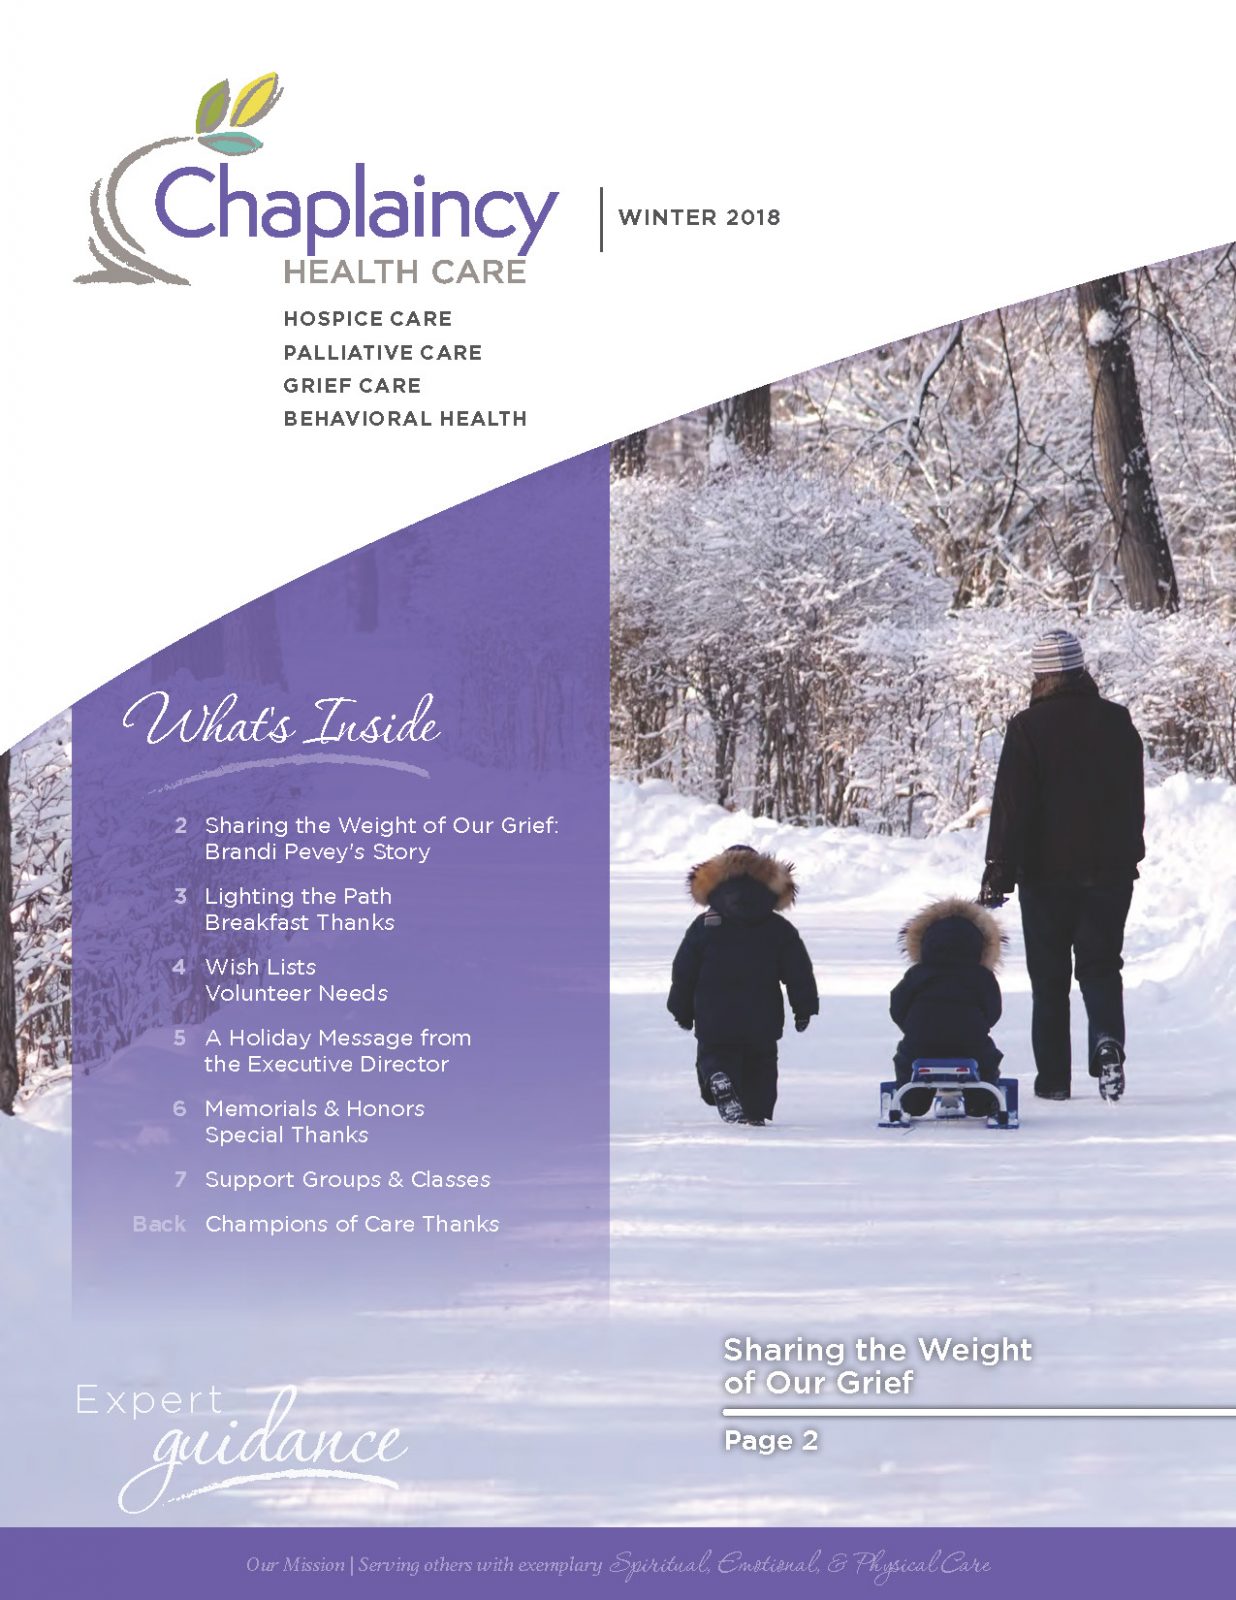 Chaplaincy Health Care Winter 2018 Newsletter